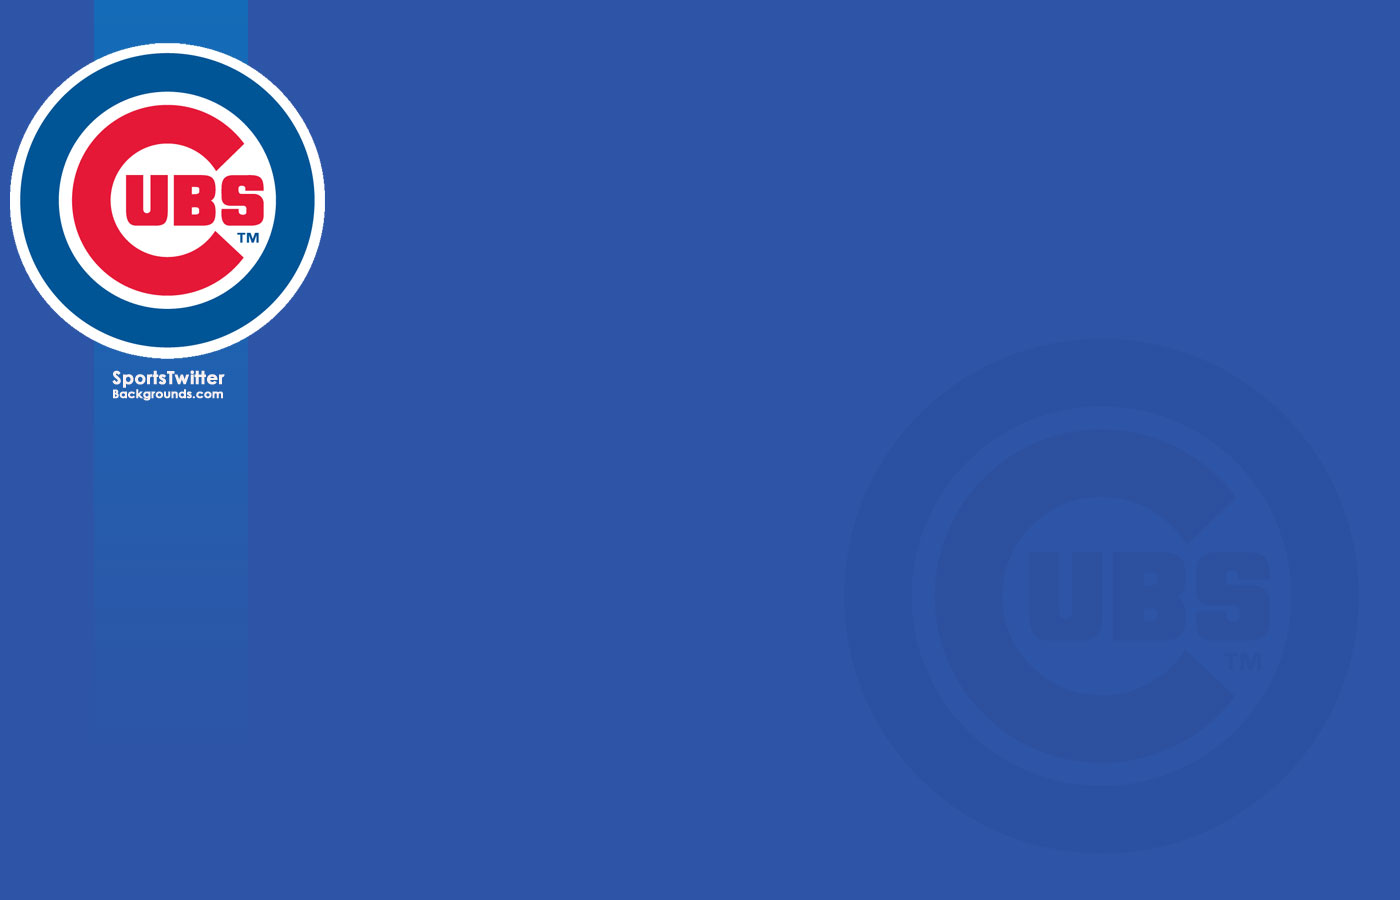 Enjoy this new Chicago Cubs desktop background